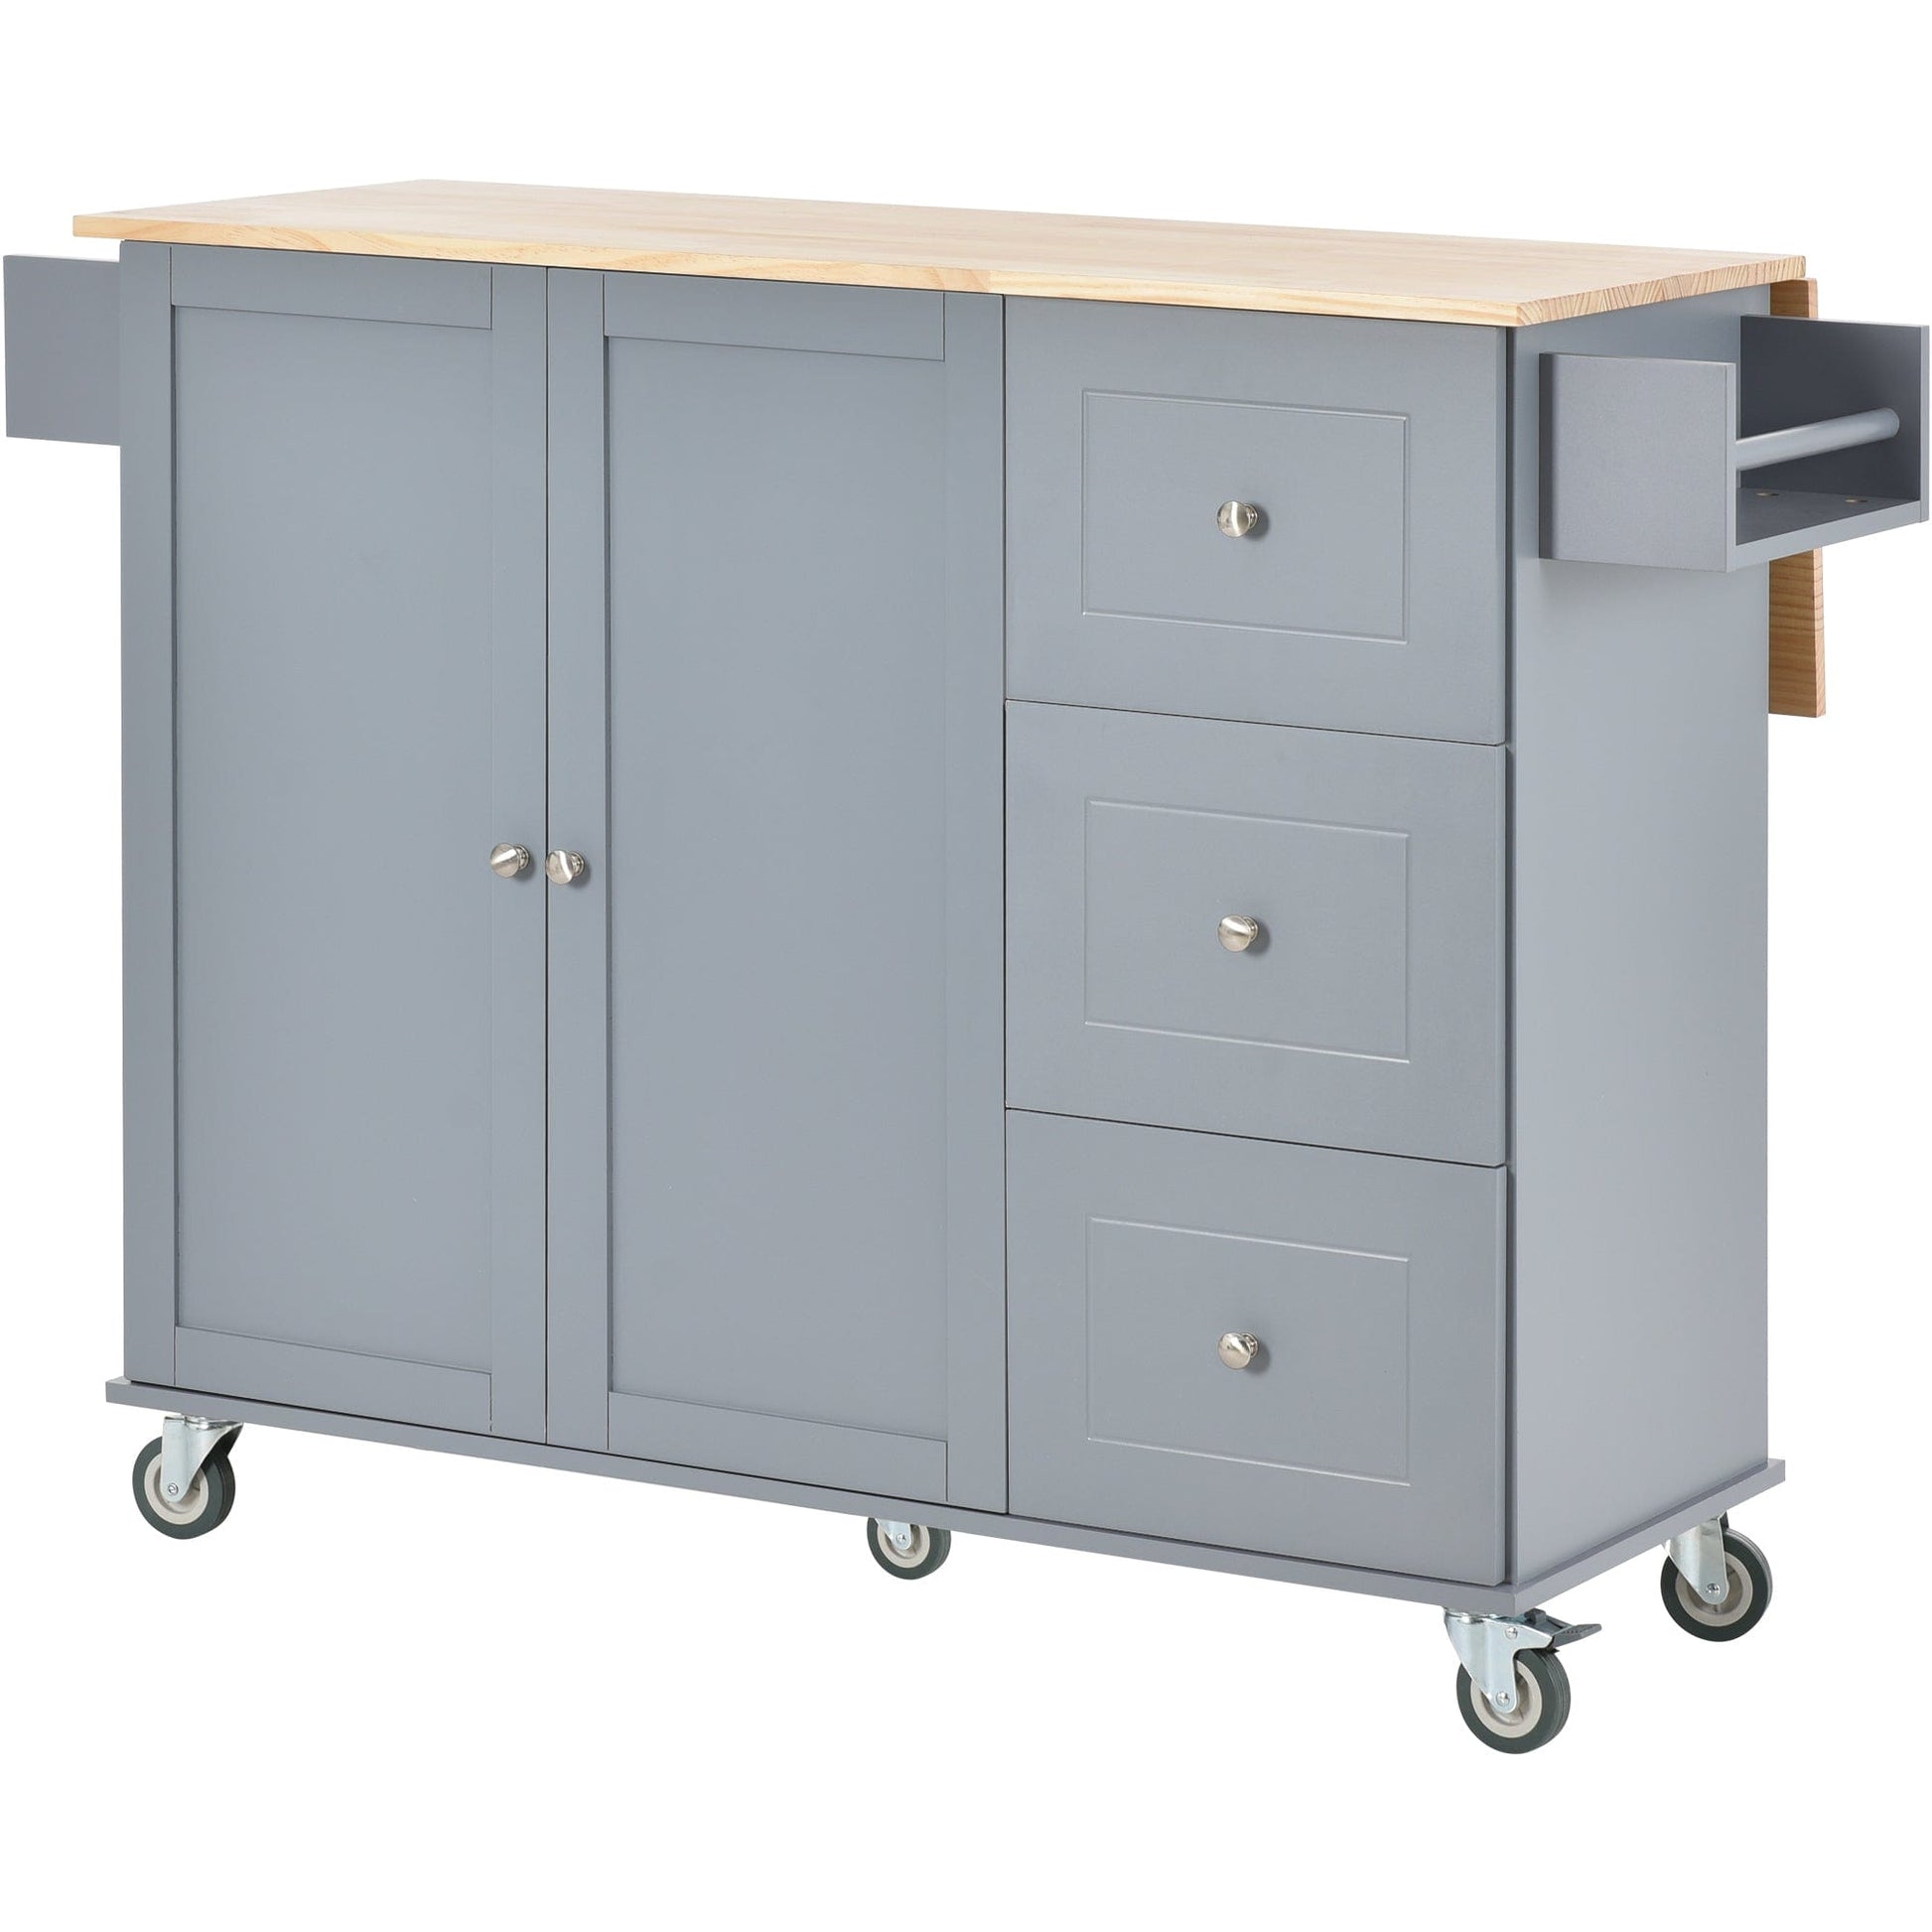 1st Choice Furniture Direct Kitchen Island Cart 1st Choice Grey Blue Mobile Kitchen Island w/ Cabinet and Racks